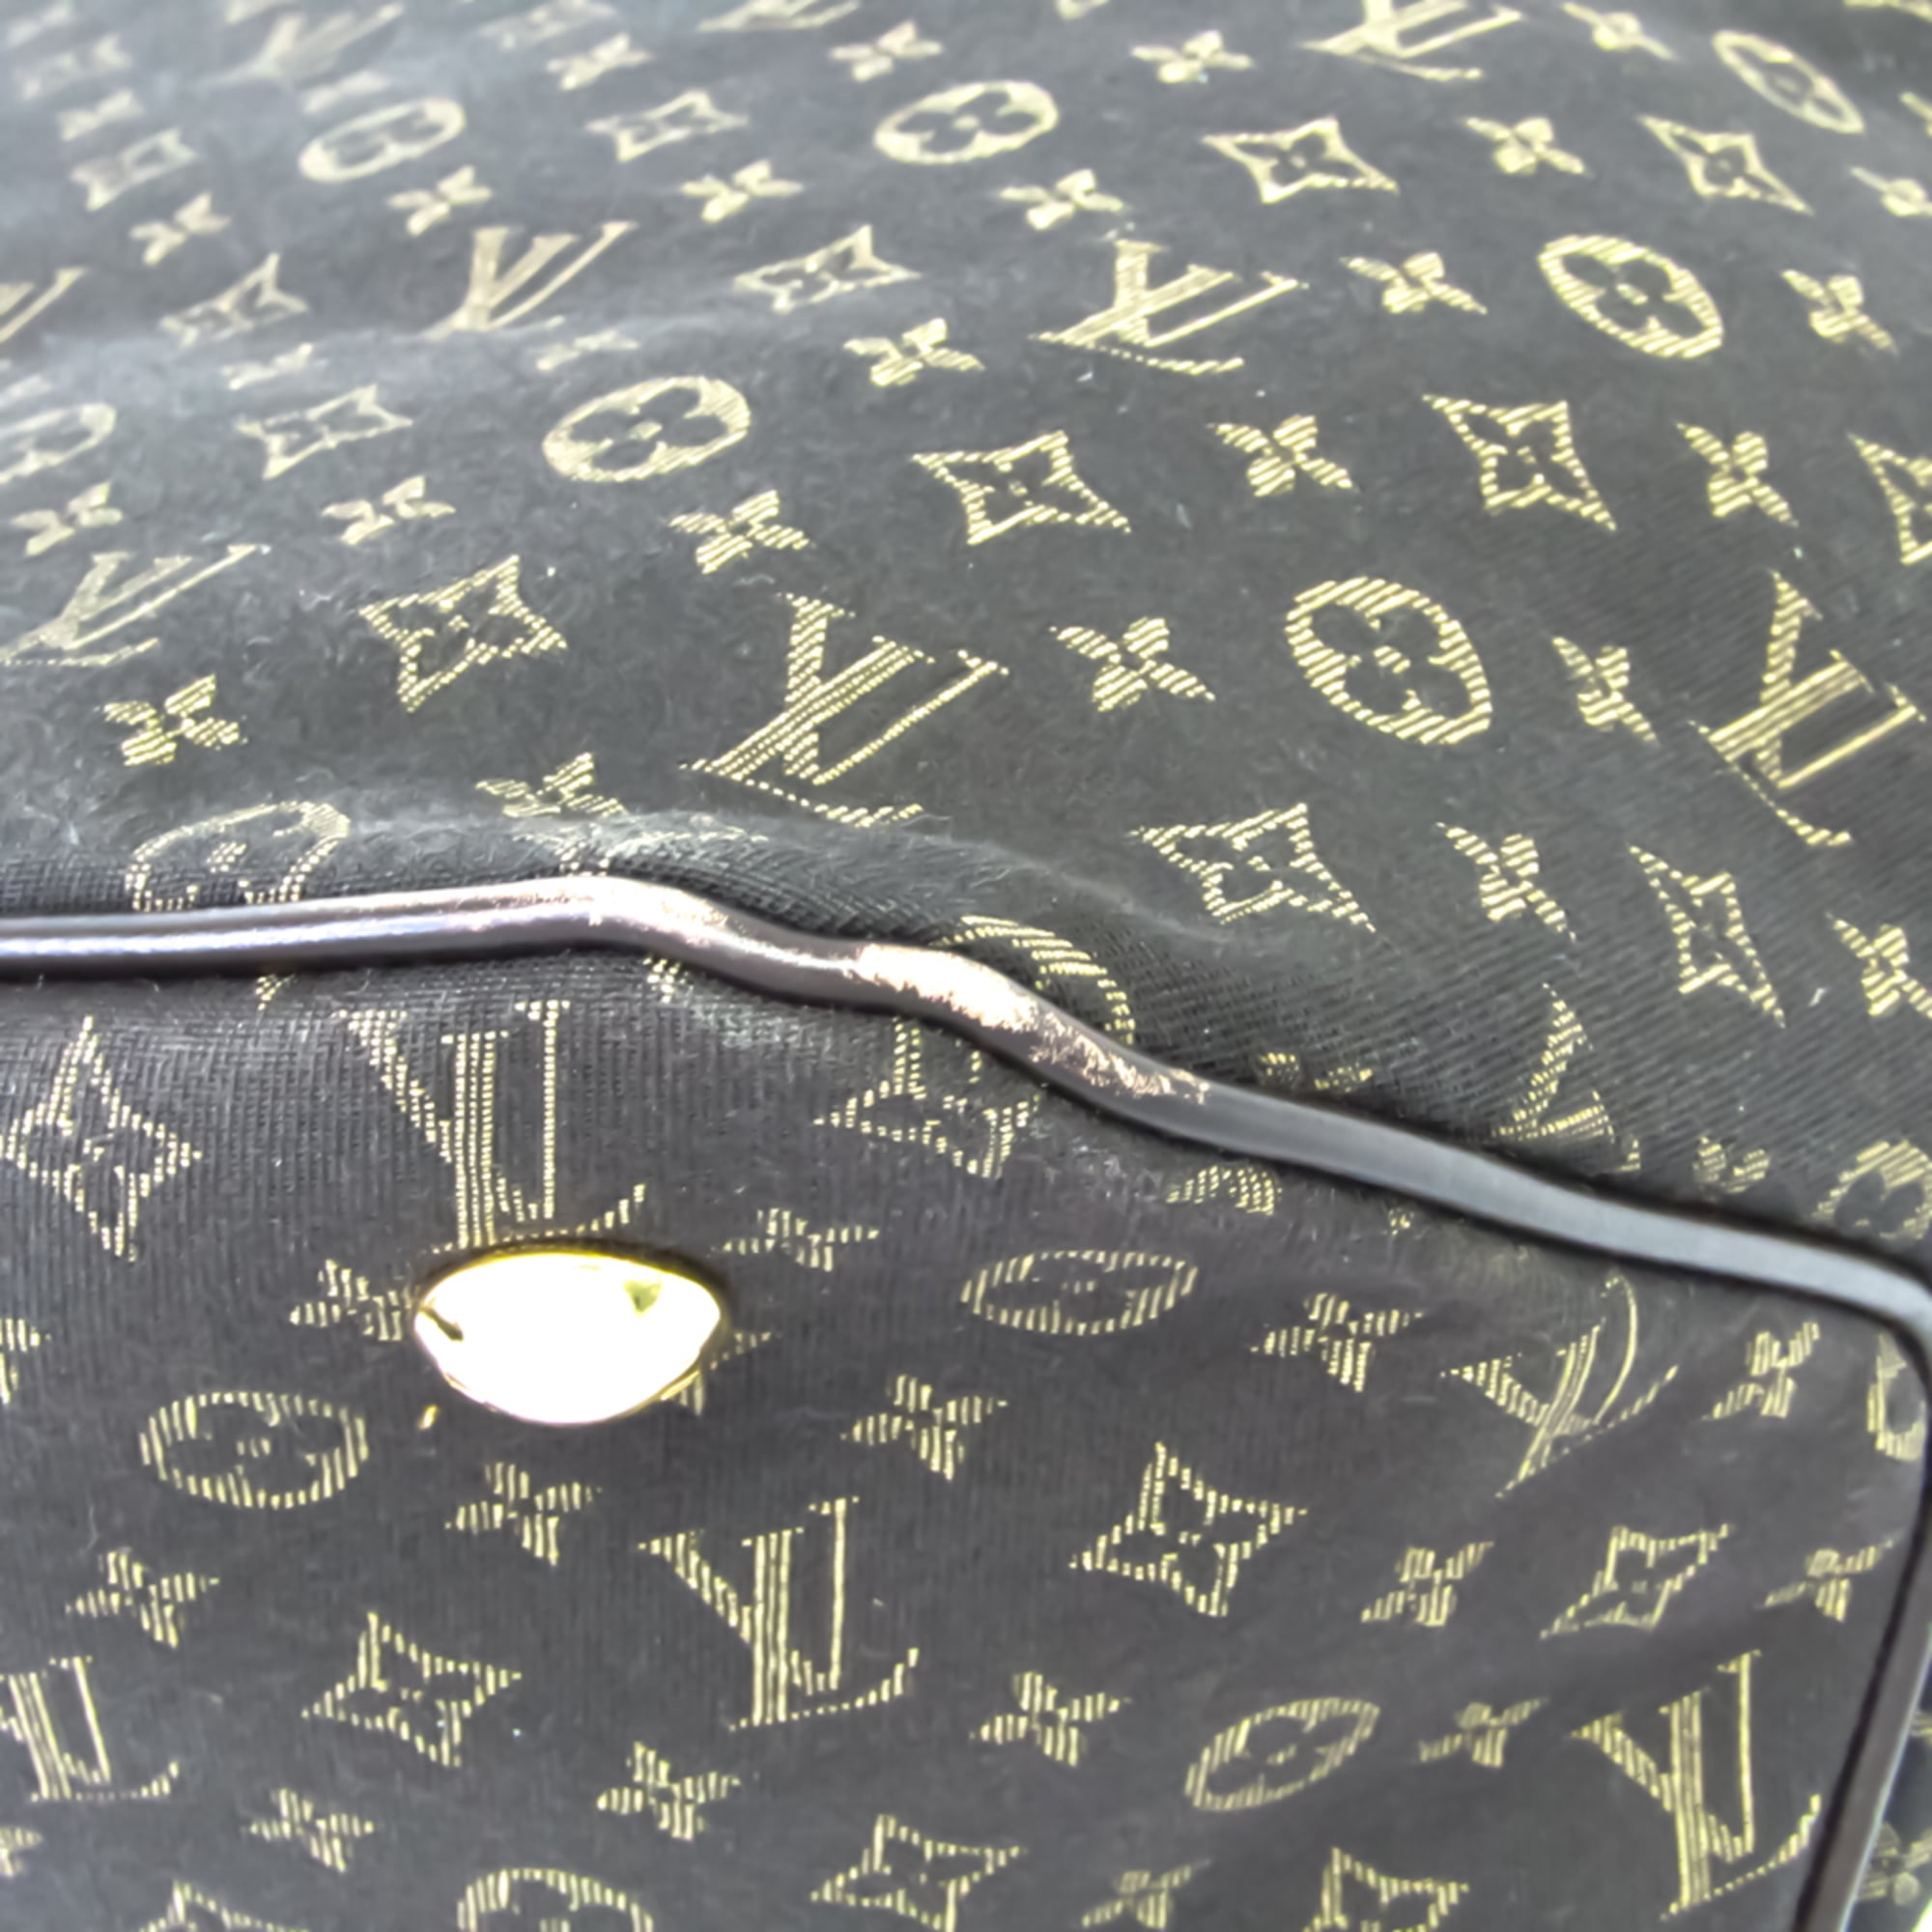 Authentic Louis Vuitton Idylle Ballade PM Leather Handbag Monogram Logo  Purse